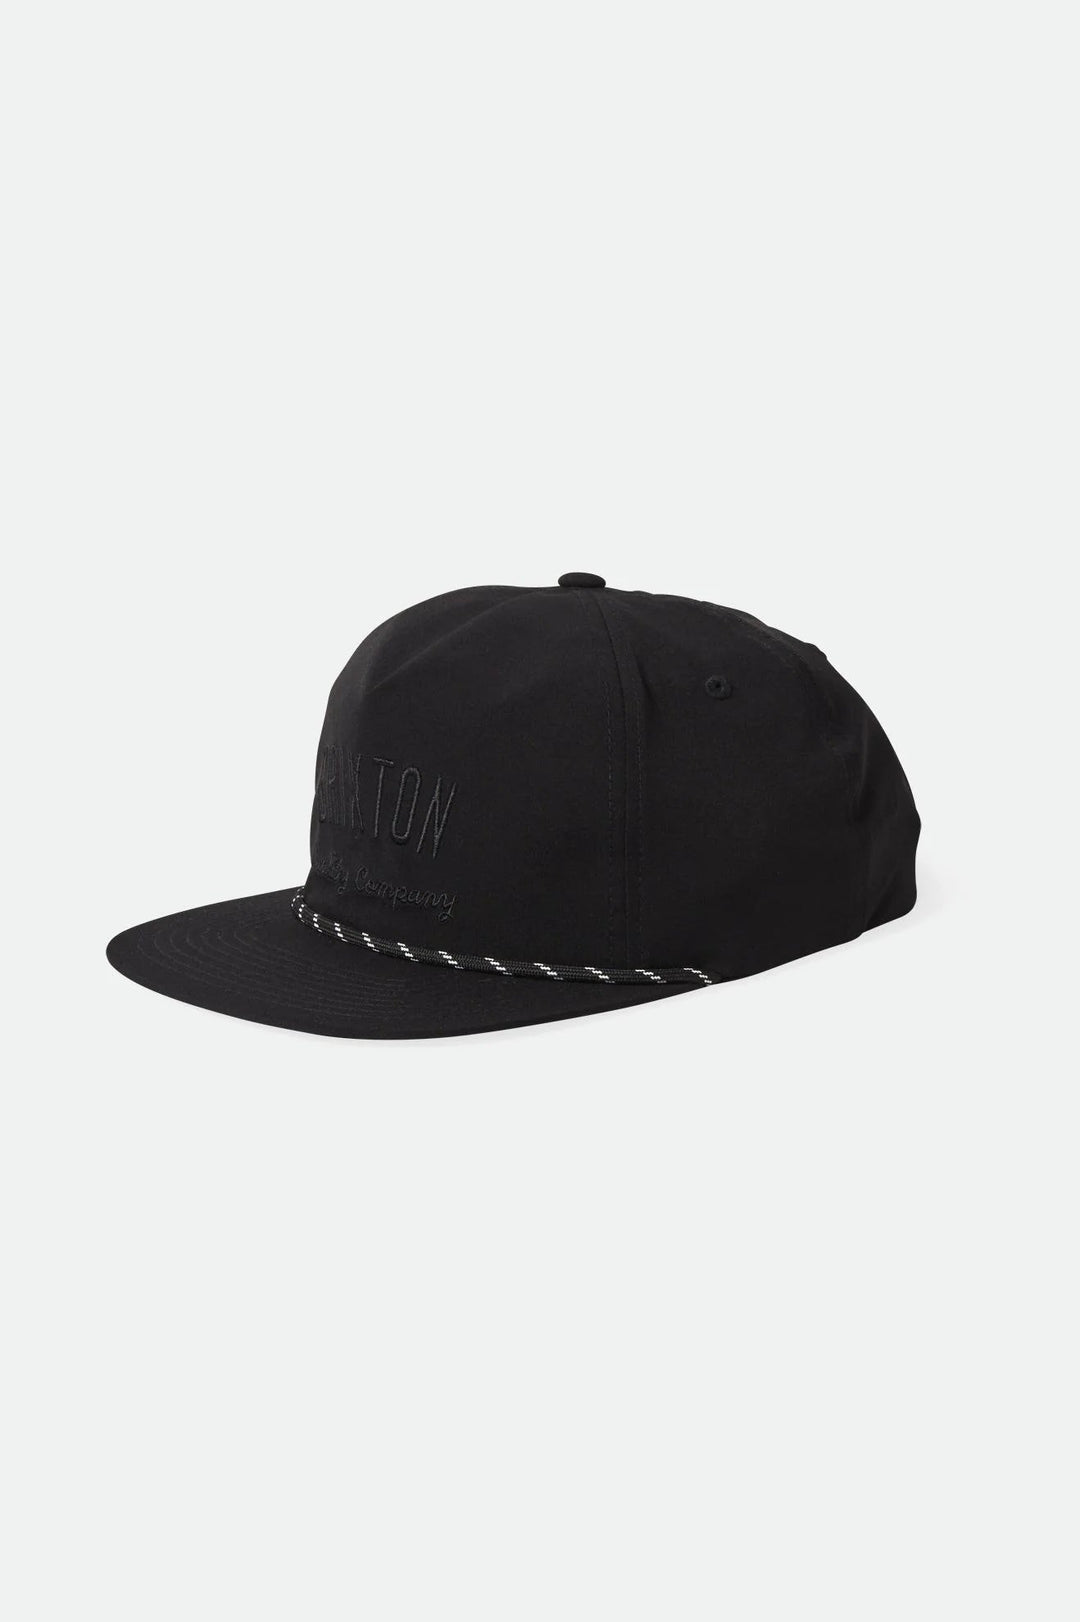 Persist SnapBack Hat - Black - Chillis & More NZ